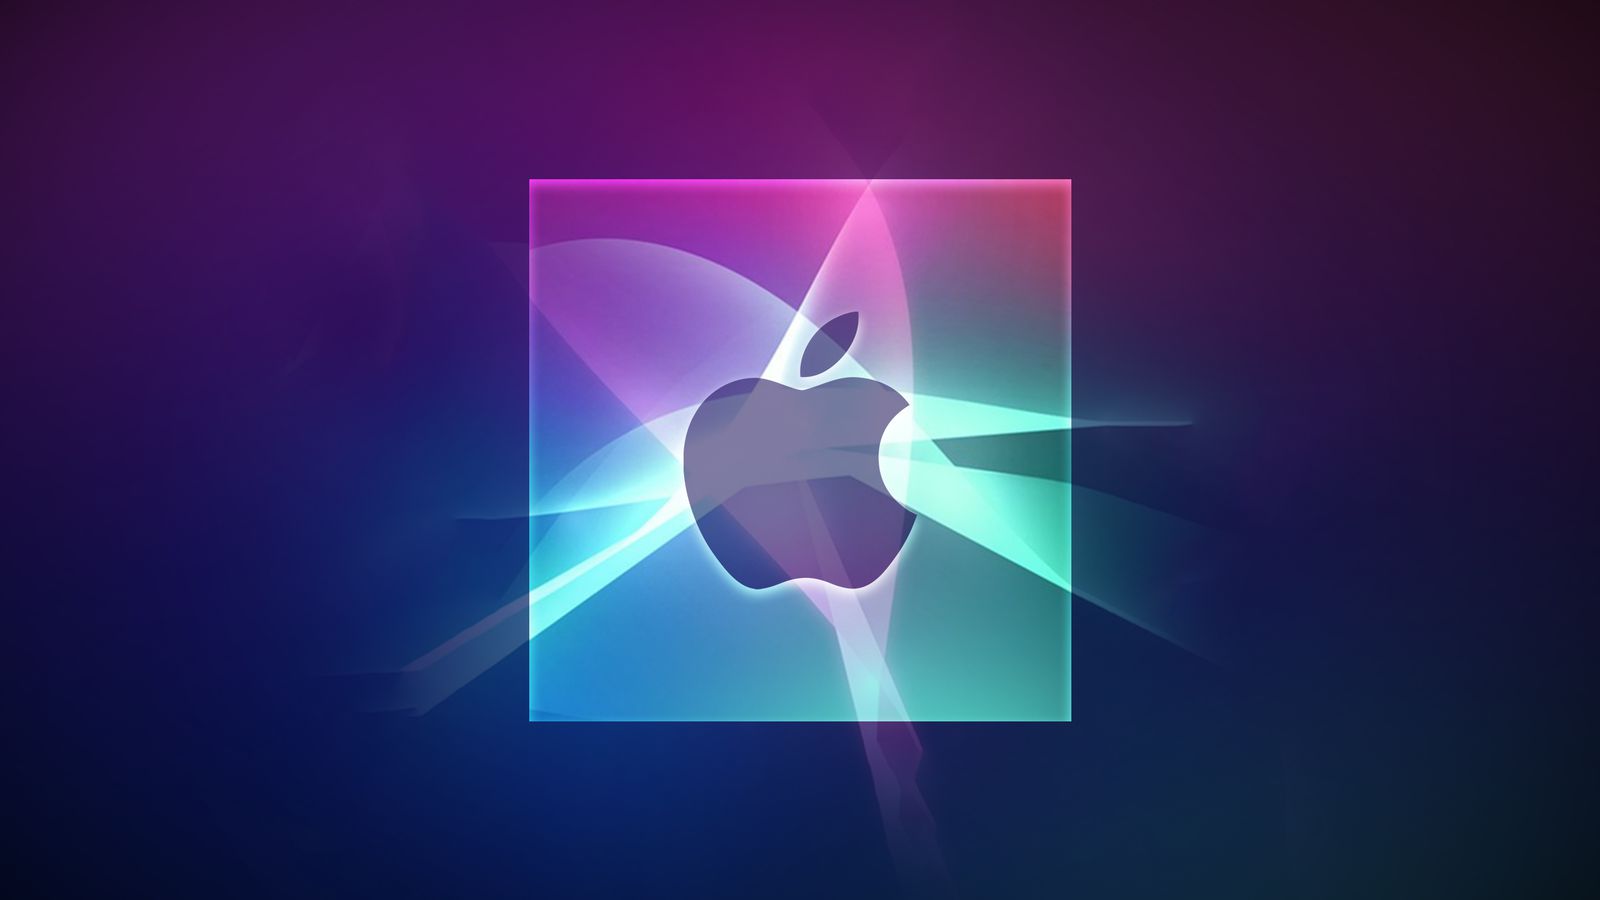 Dari iPhoneIslam.com, logo Apple dengan latar belakang gradien warna ungu dan biru, disempurnakan dengan efek cahaya dan bayangan, disorot di Fringe News minggu ini